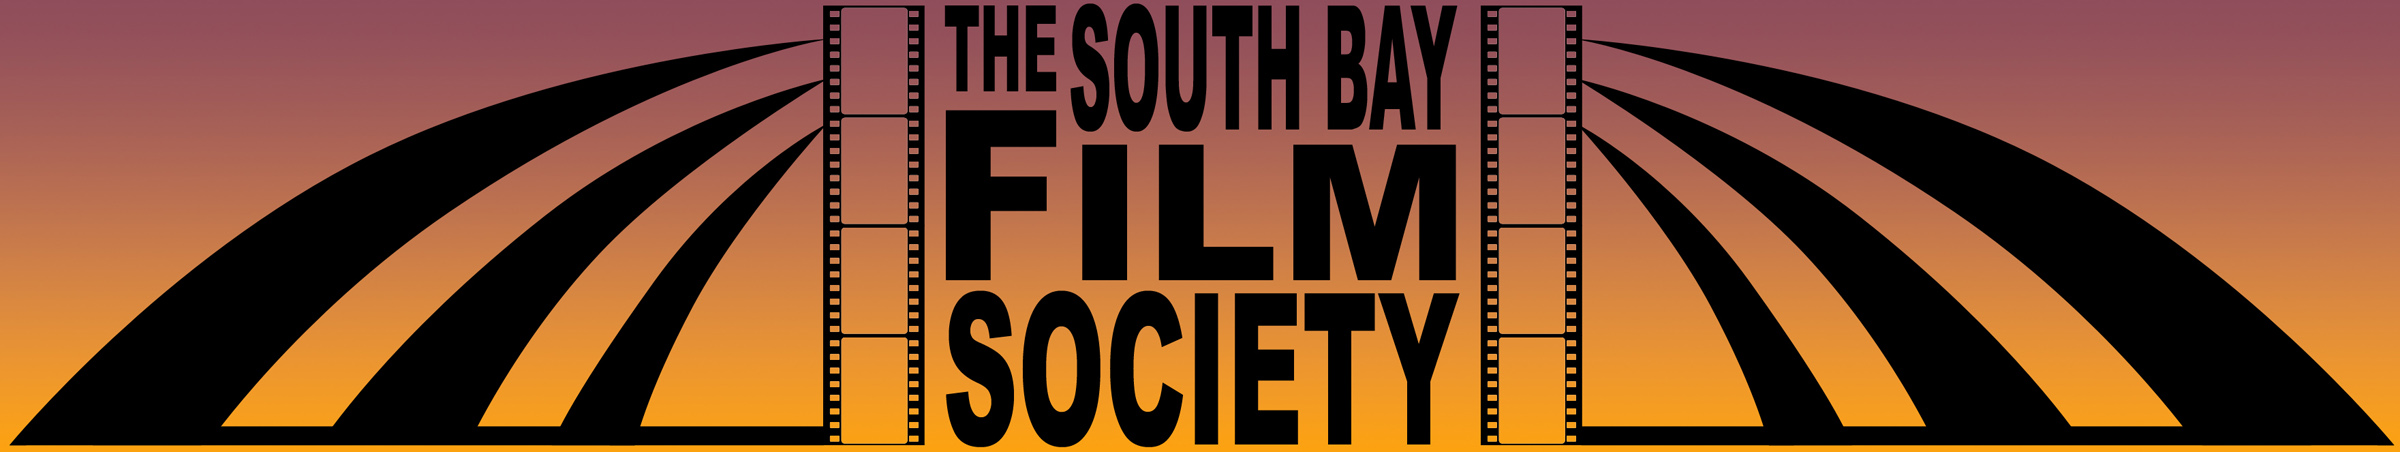 The South Bay Film Society